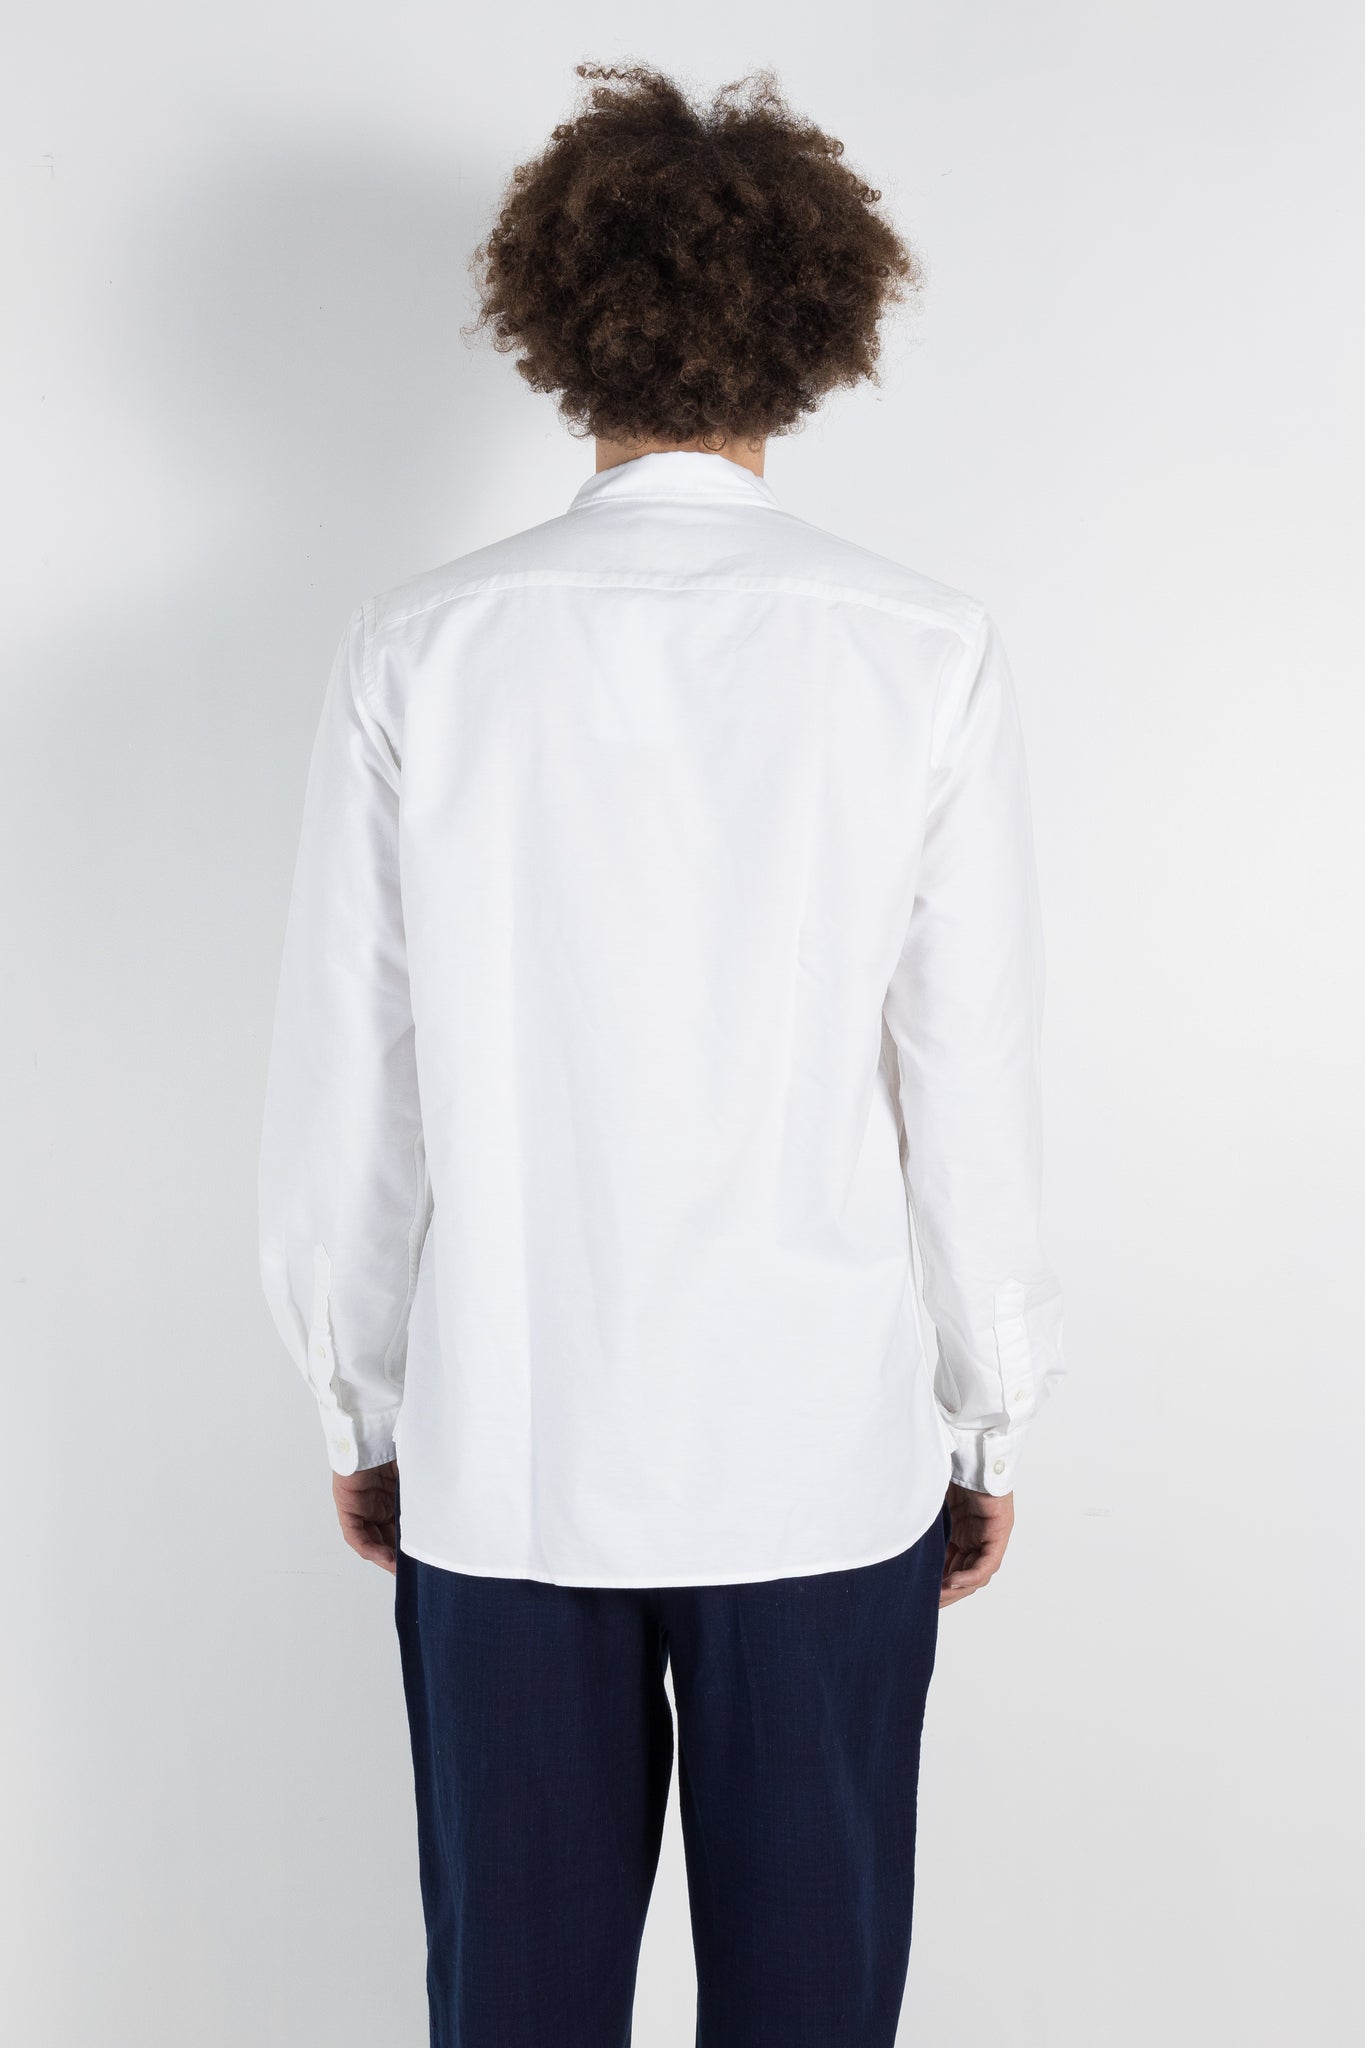 Mens shirt | La Paz Teles Shirt | The Standard Store